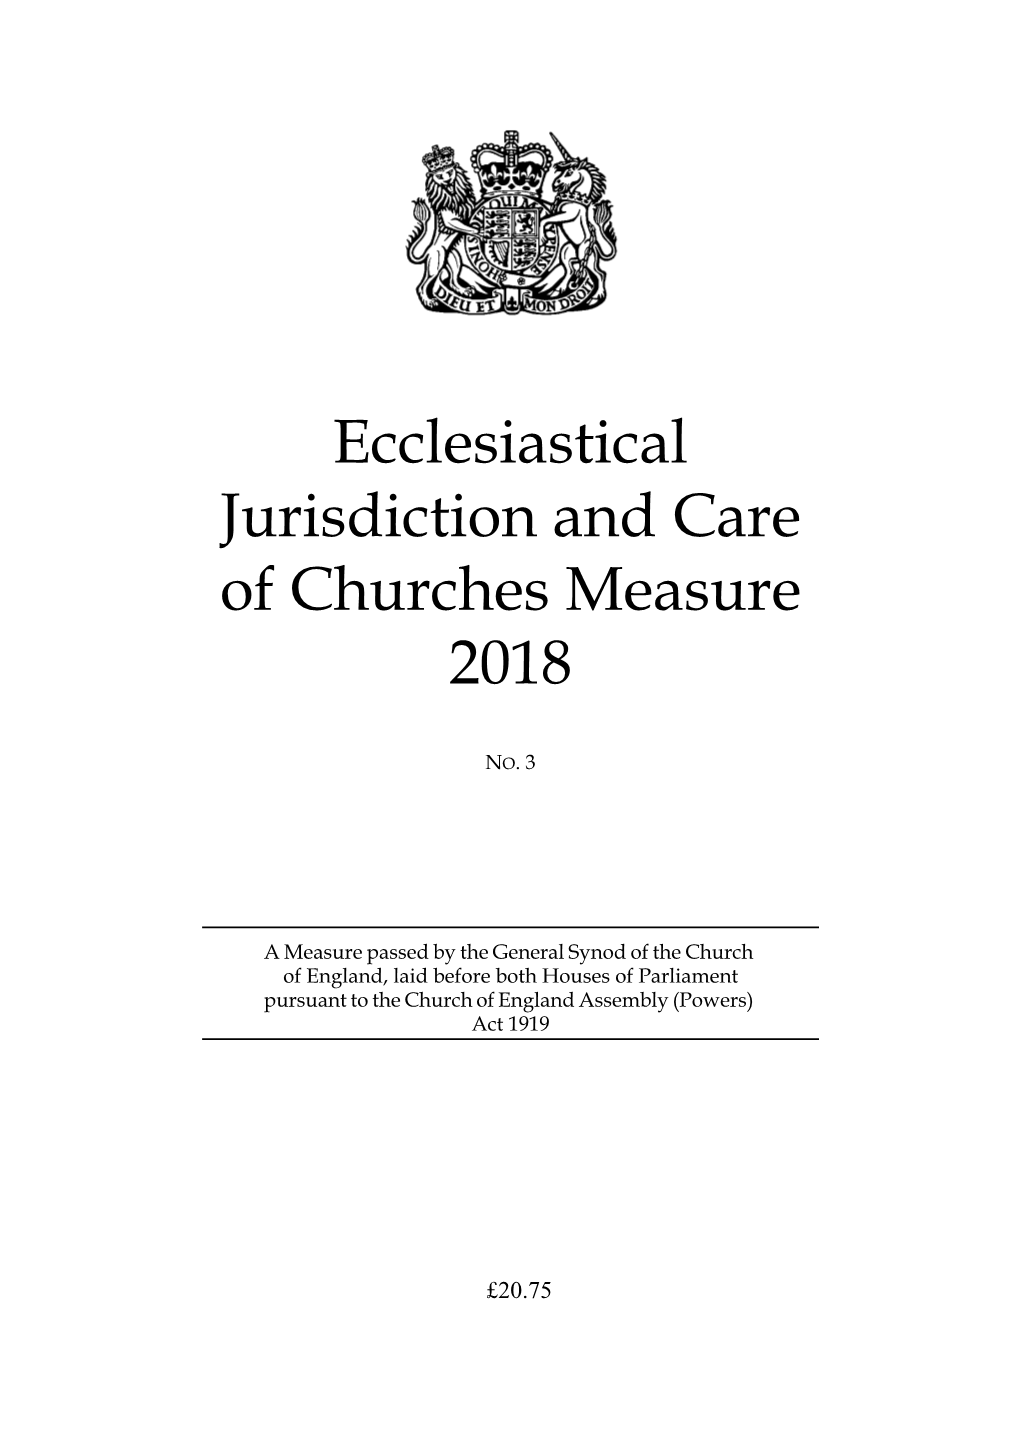 Ecclesiastical Jurisdiction and Care of Churches Measure 2018